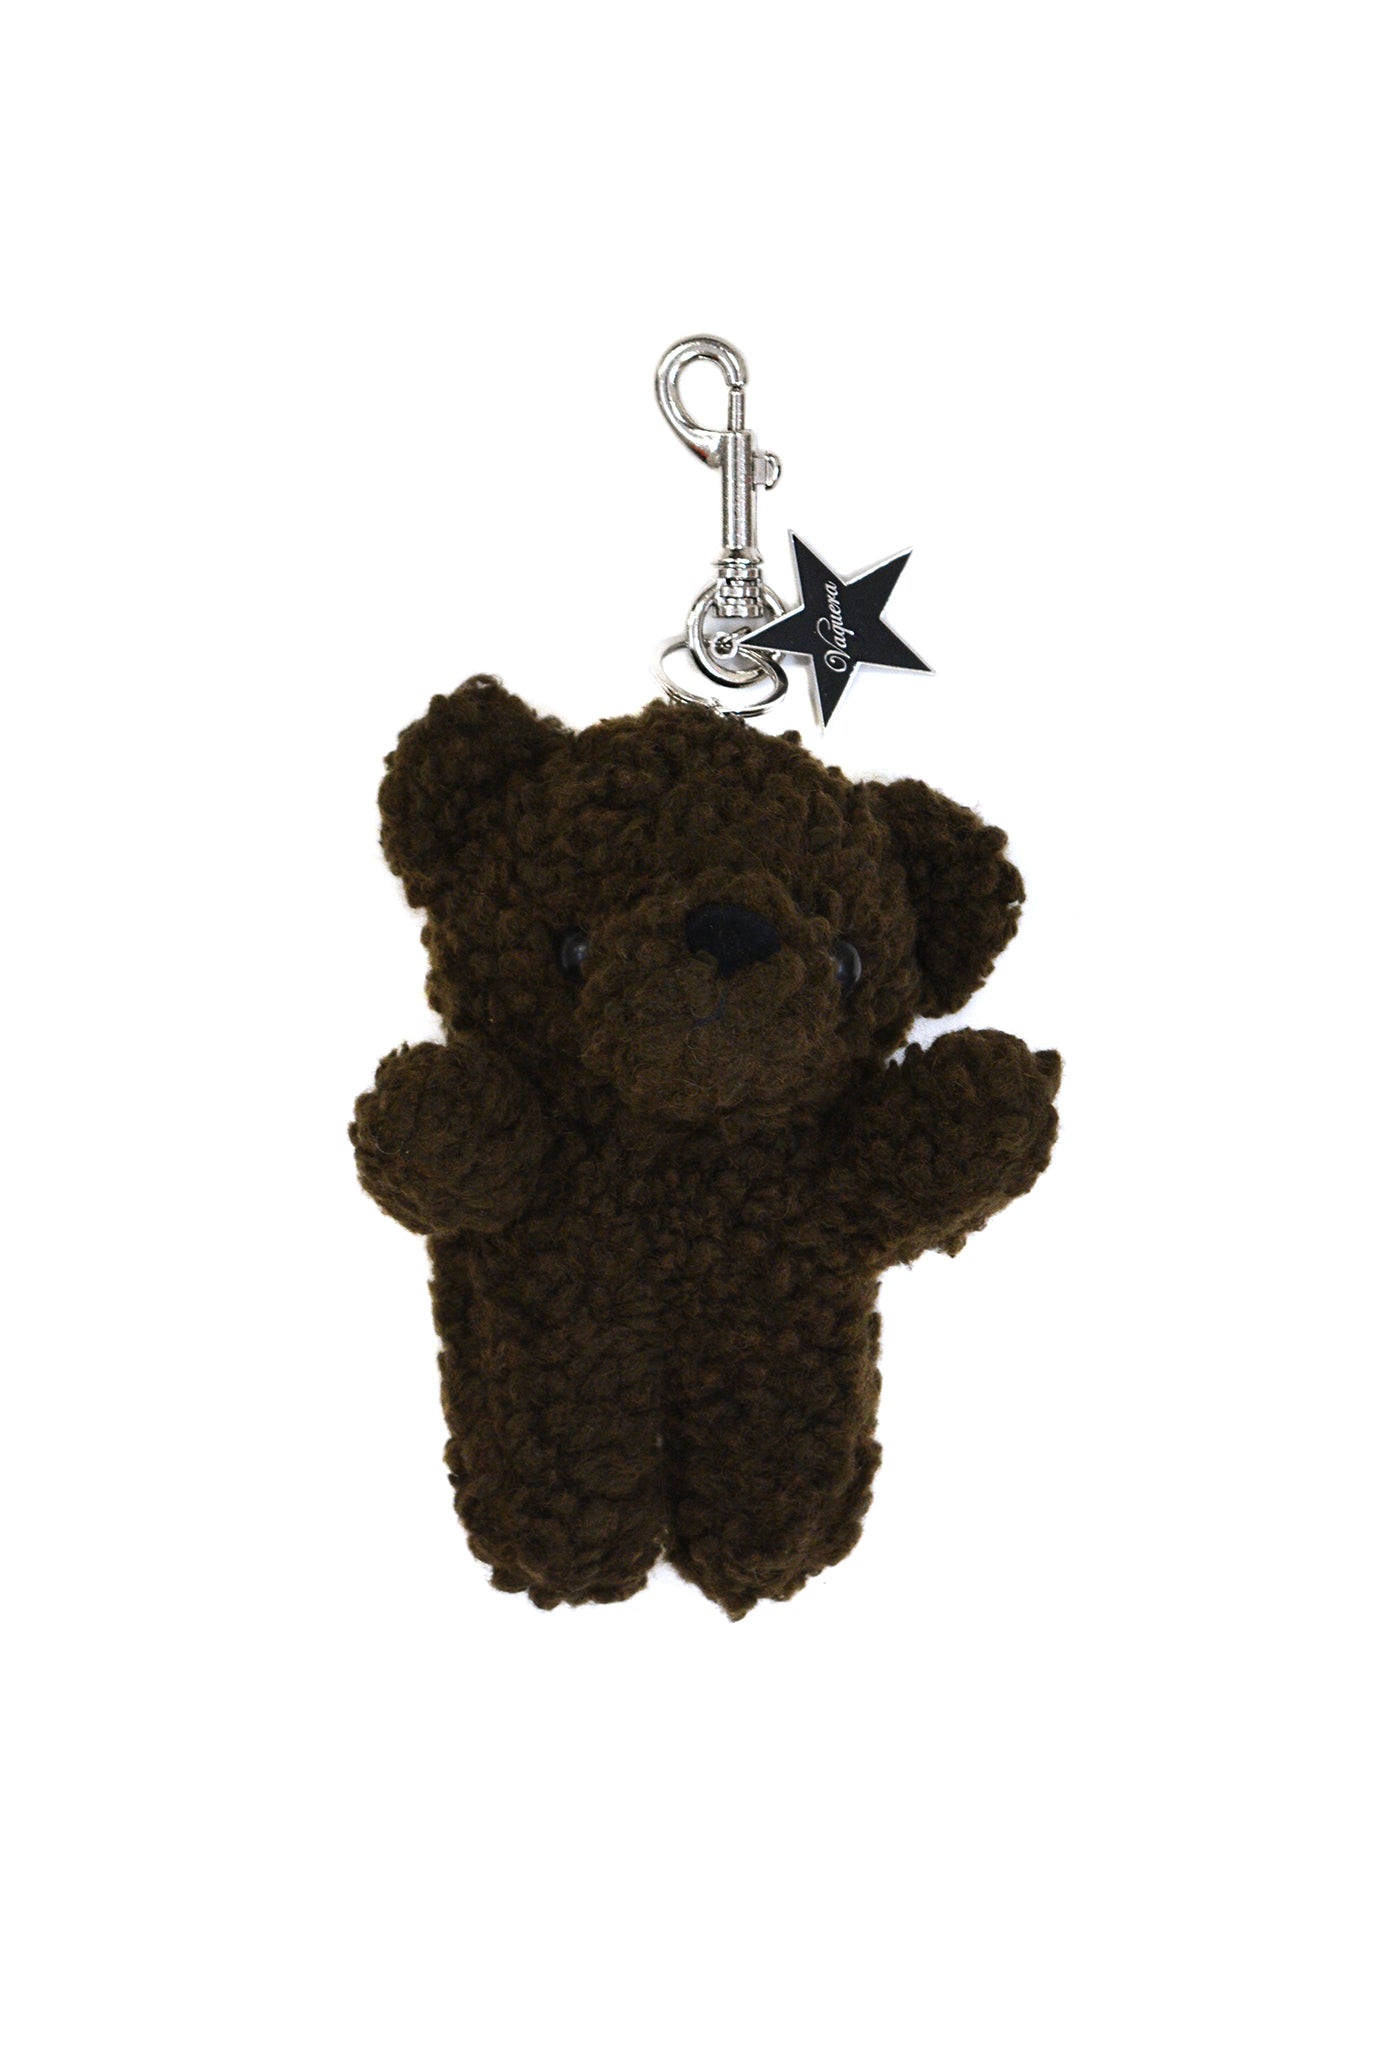 VAQUERA Brown Teddy Bear Keychain